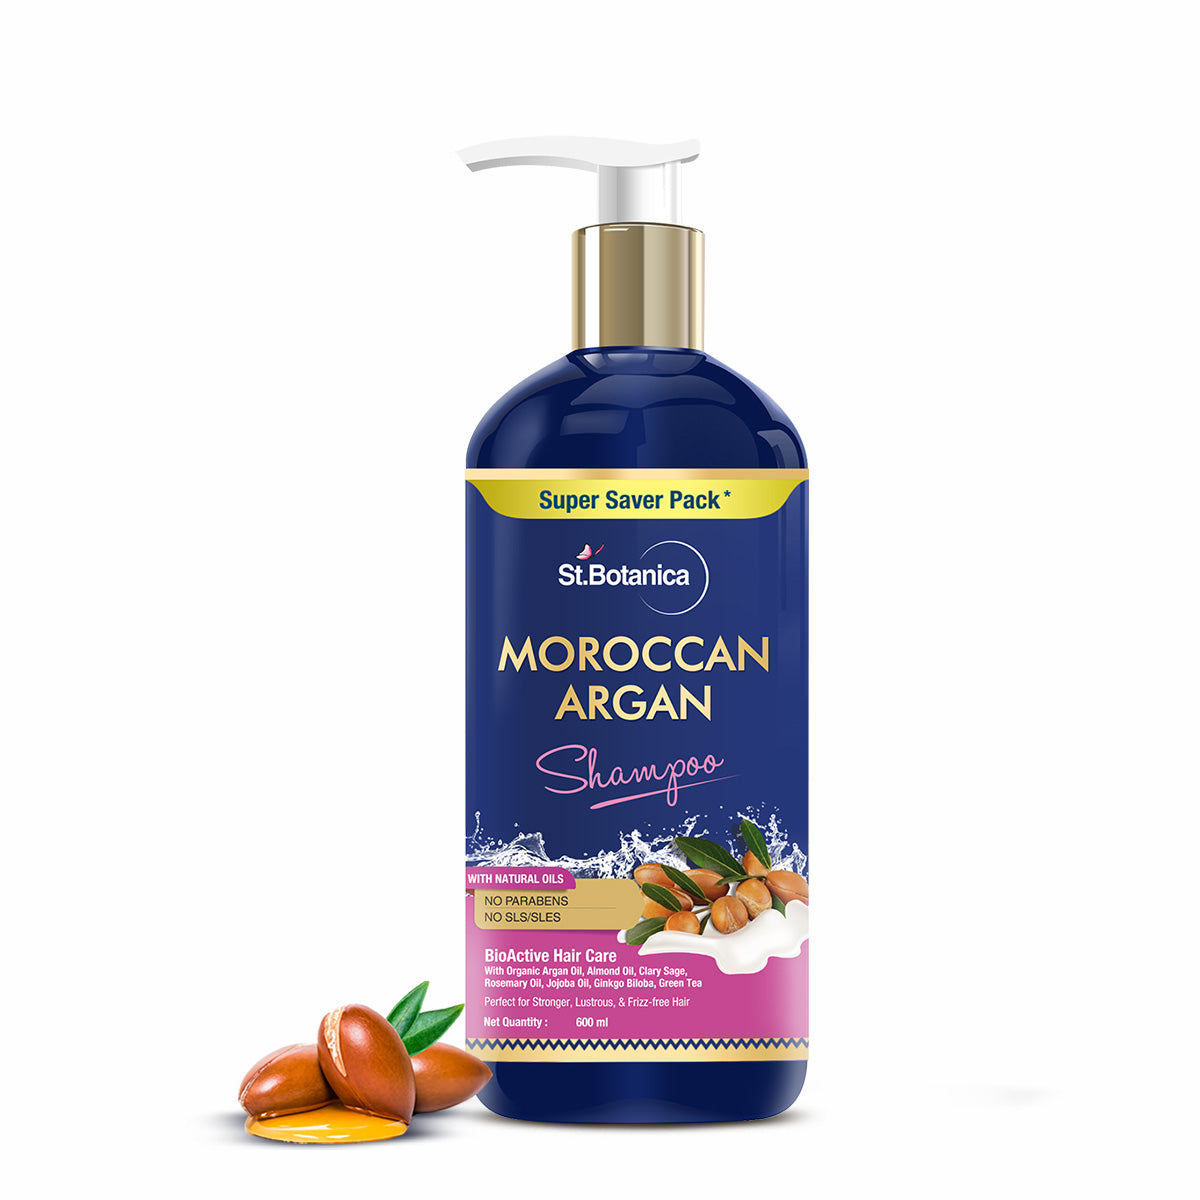 St.Botanica Moroccan Argan Hair Shampoo, 600ml with Moroccan Argan Oil to Nourish Dull & Dry Hair | Cruelty Free & Vegan | Paraben Free | No SLS/SLES